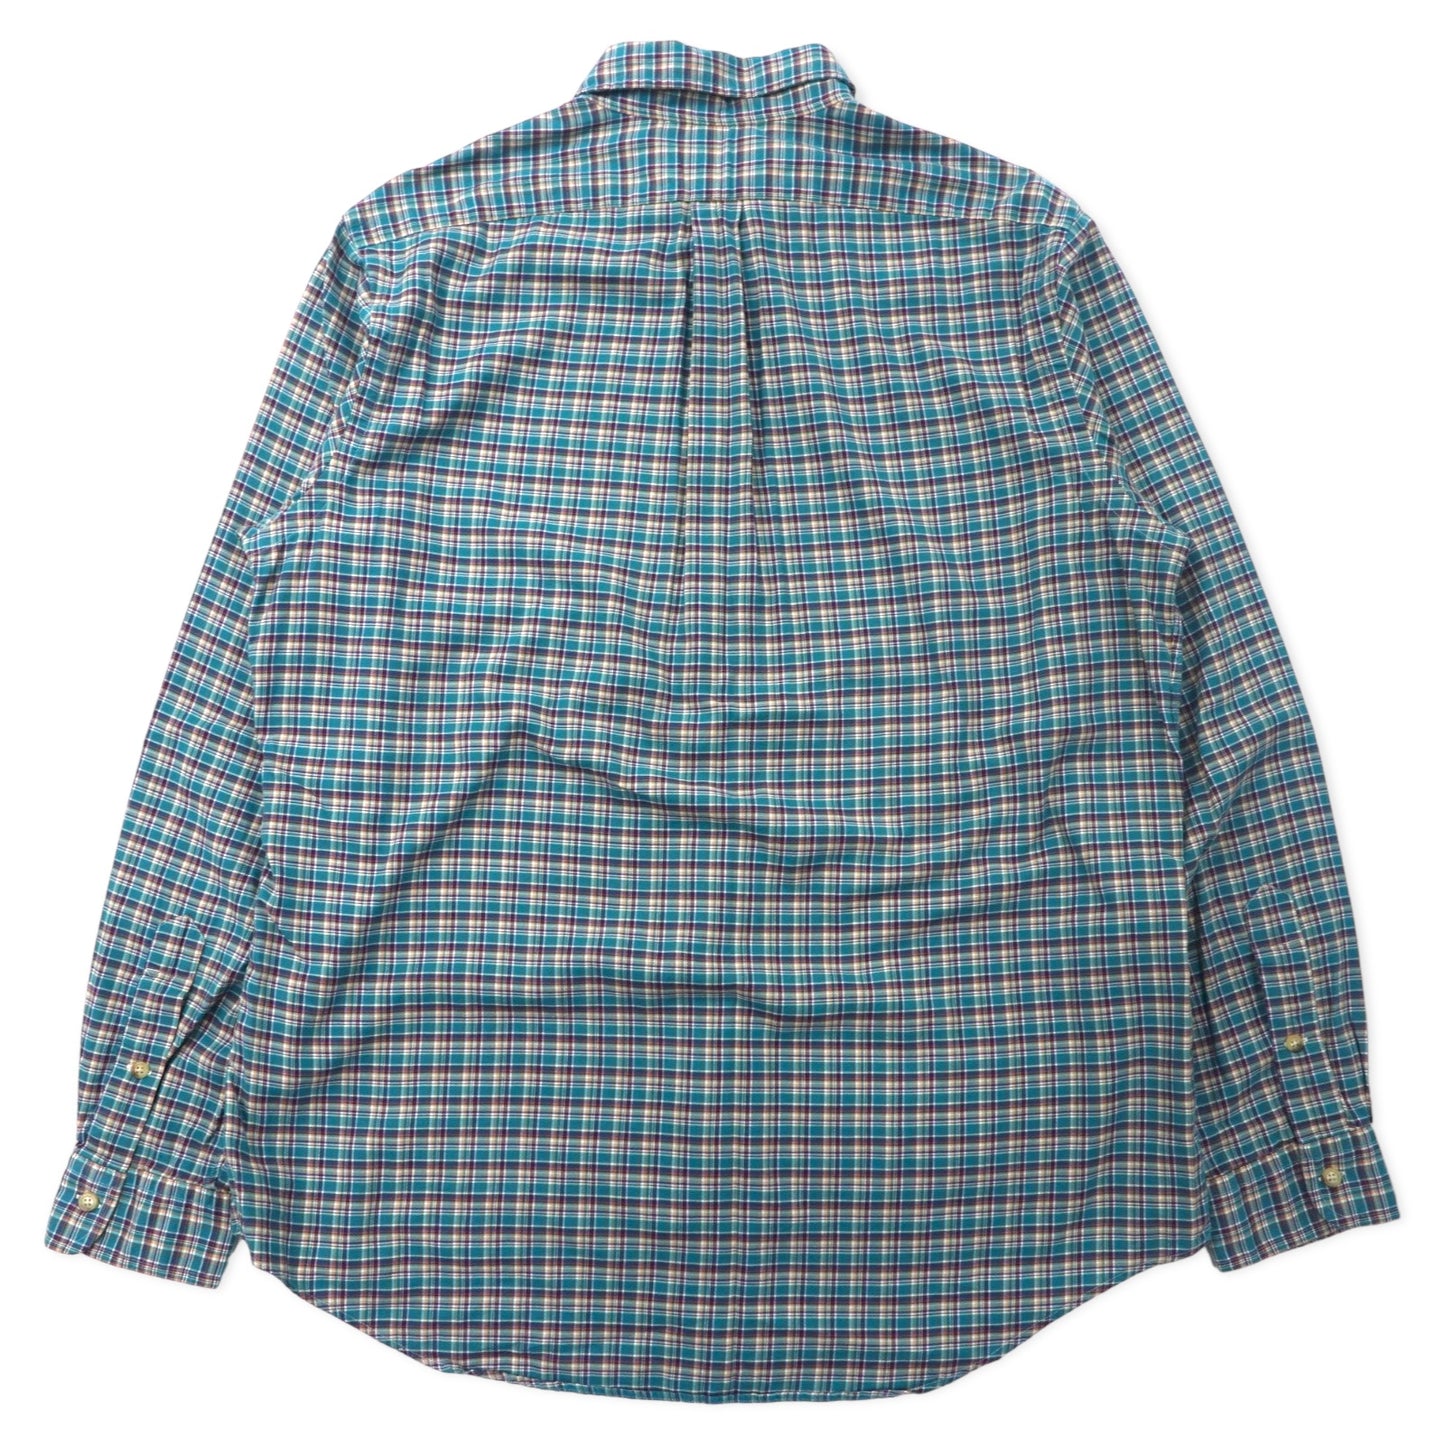 RALPH LAUREN ボタンダウンシャツ L グリーン チェック コットン スモールポニー刺繍 ビッグサイズ